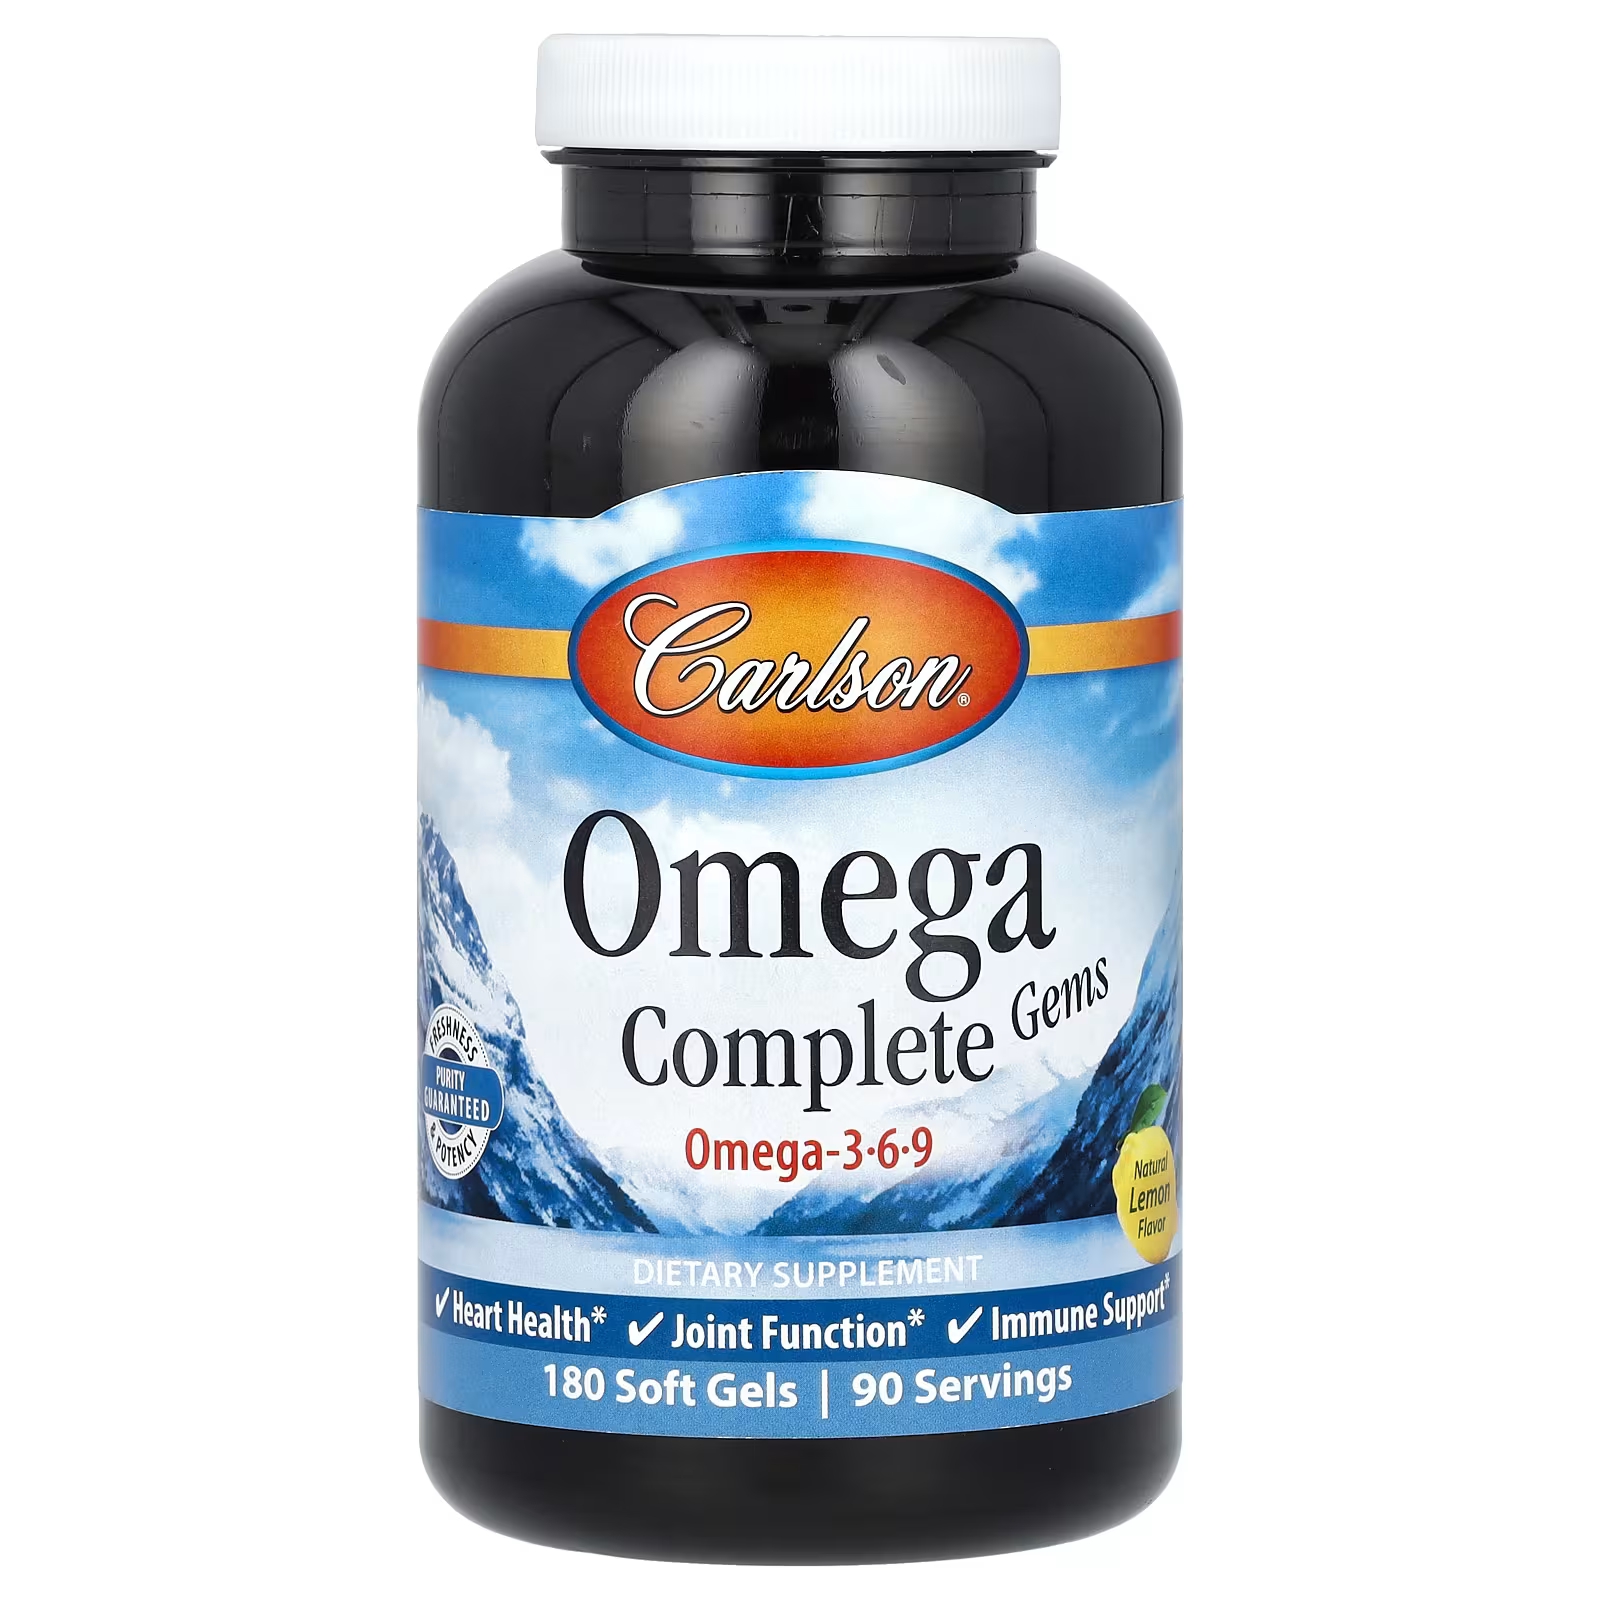 Carlson Omega Complete Gems Omega-3-6-9 Натуральный лимон 180 мягких таблеток carlson maximum omega minis натуральный лимон 500 мг 80 мягких таблеток